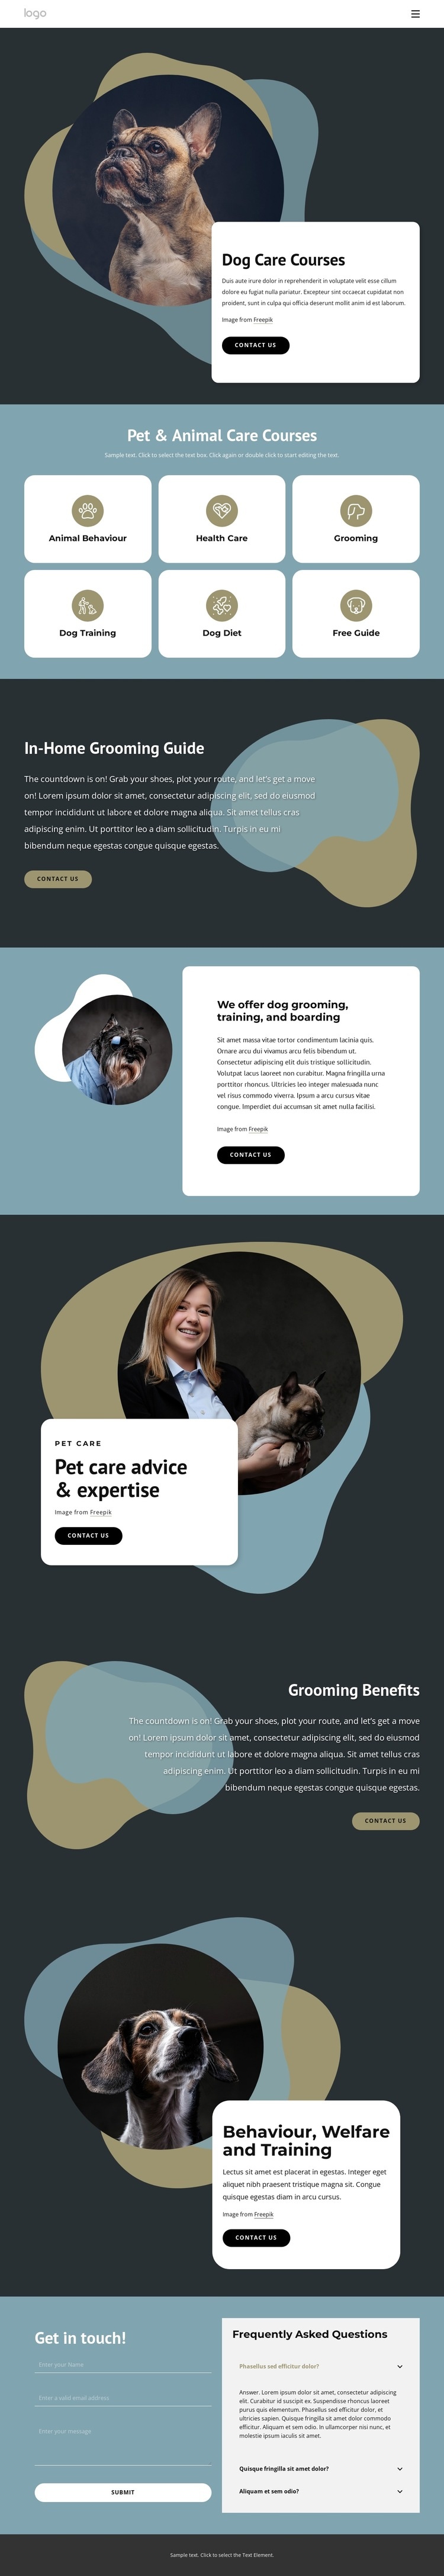 Dog care courses Web Page Design